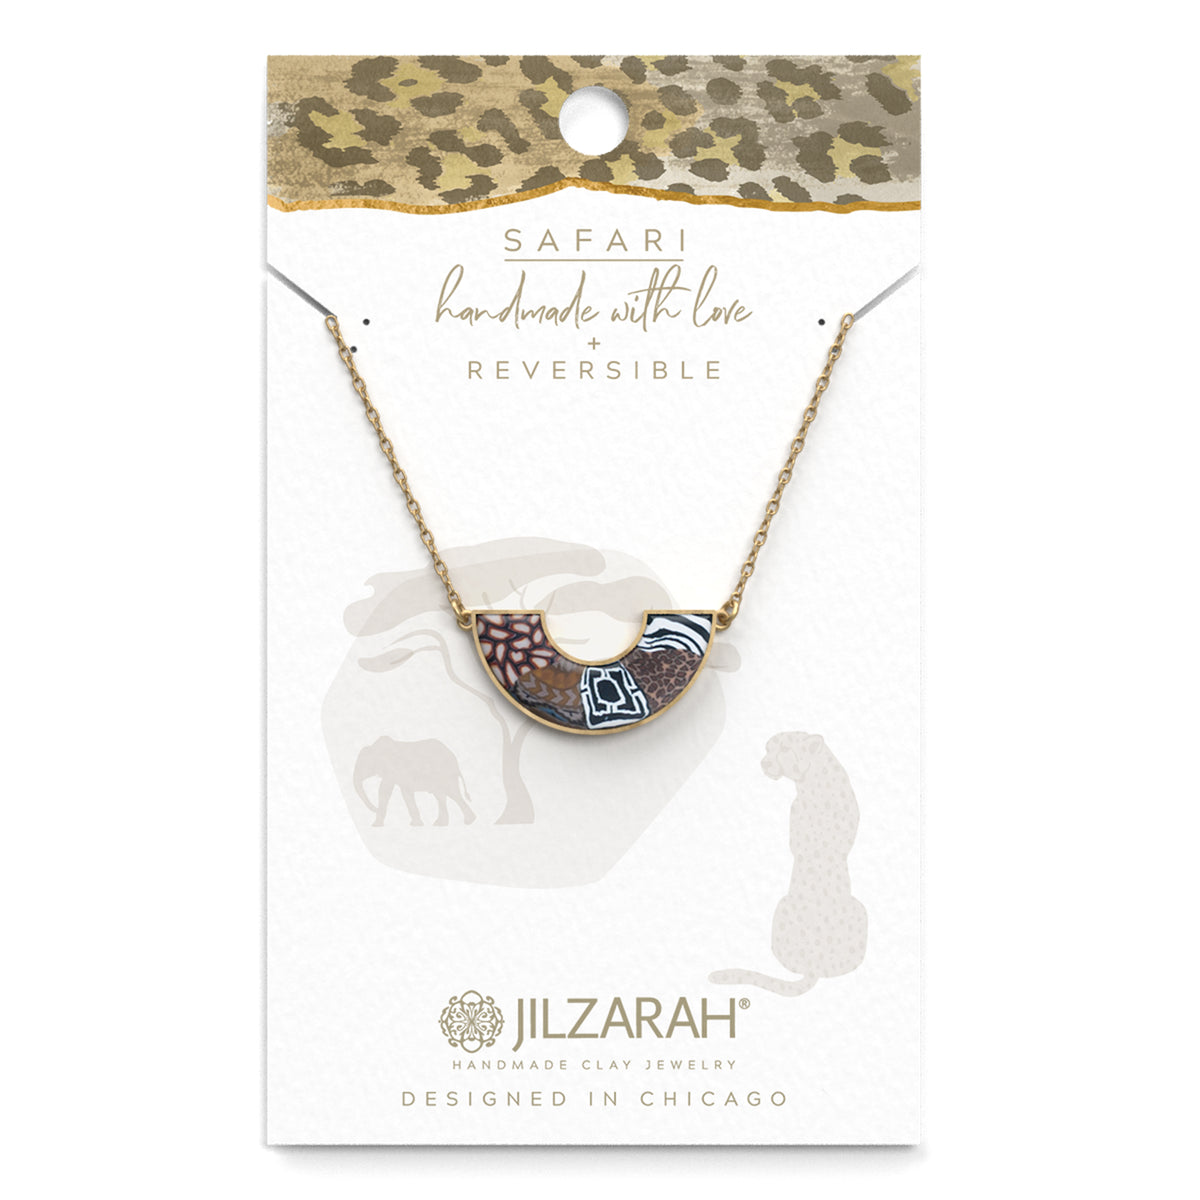 Safari Reversible Arc Necklace